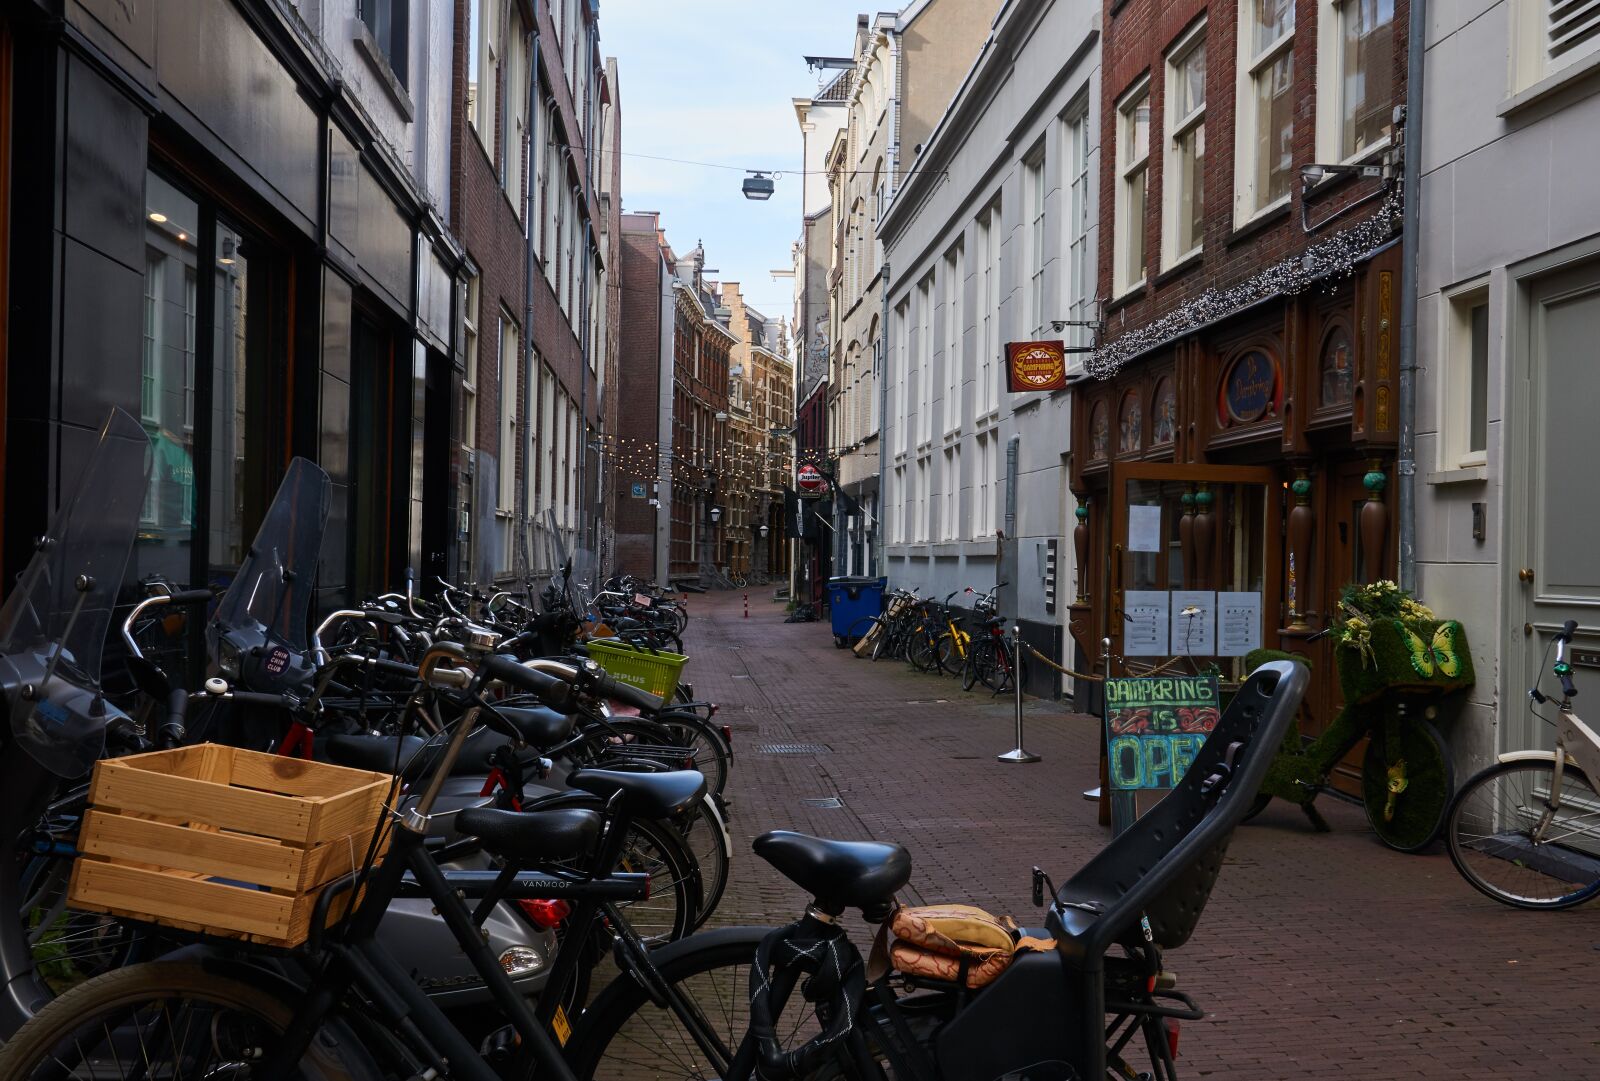 Sony a6000 sample photo. "City, bike, amsterdam" photography